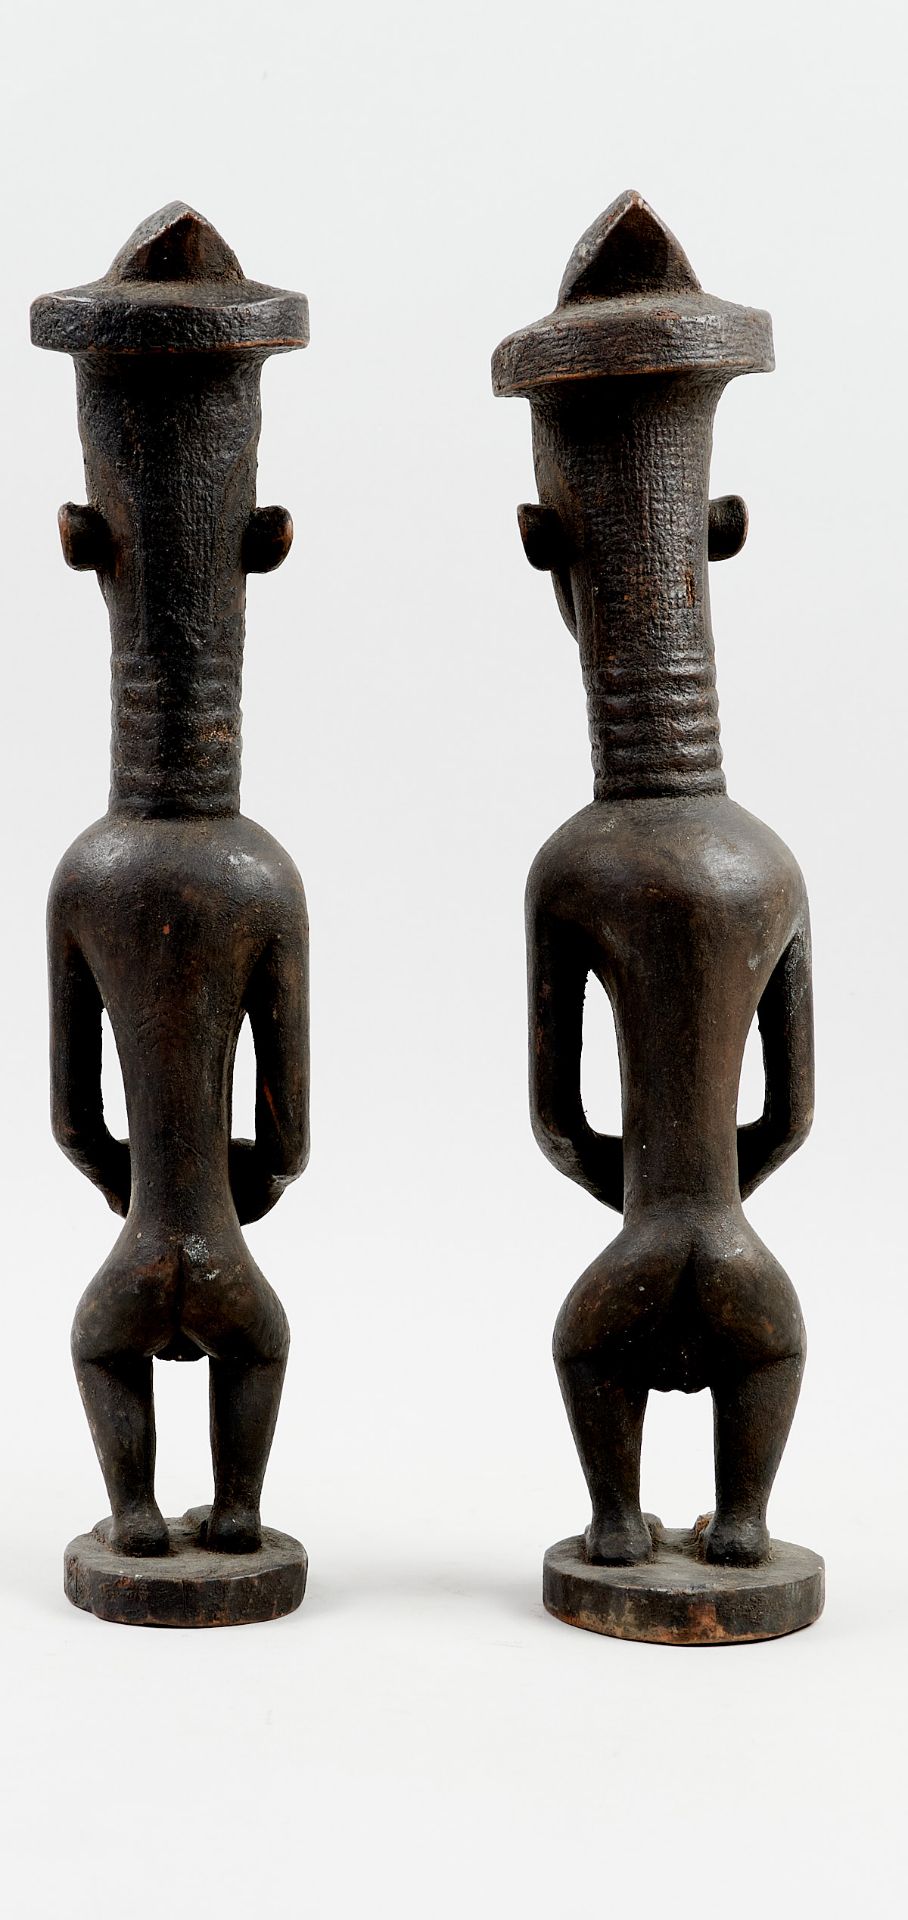 Kunsthandwerk - Afrika - Paar Skulpturen im Kuba-Stil. - Holz, schwarz bemalt. - Image 2 of 3